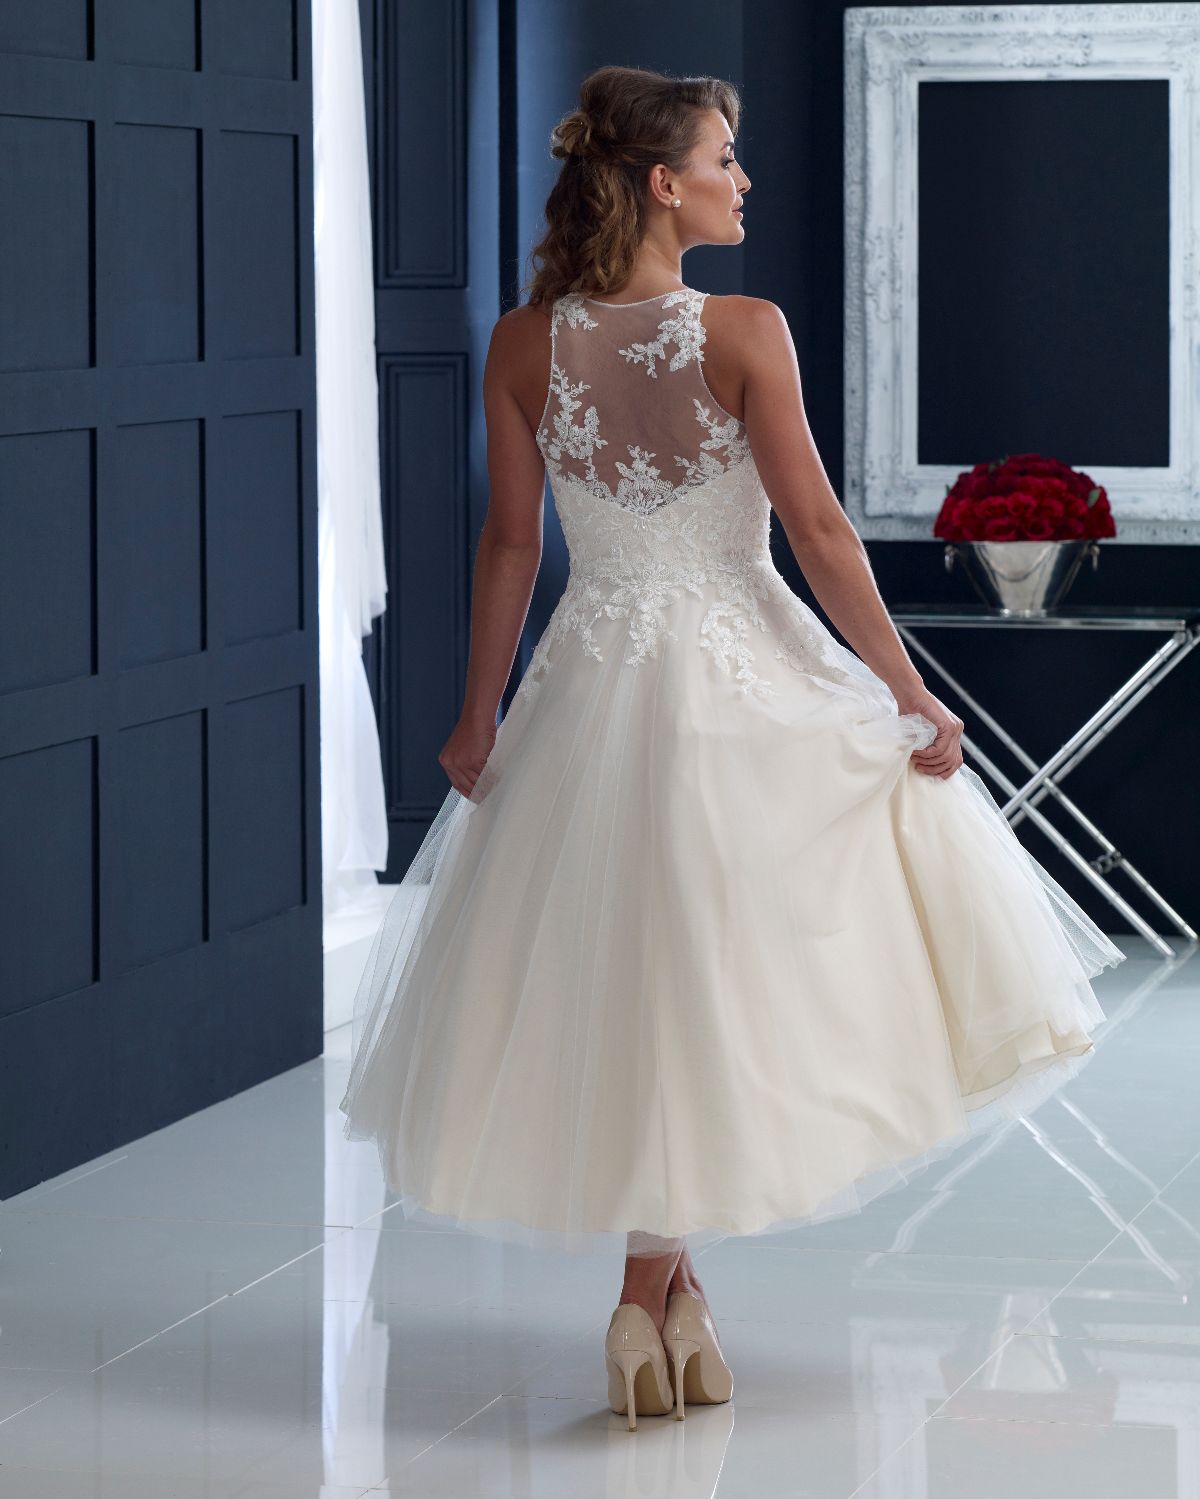 Best Dress 2 Impress Bridal-Image-89